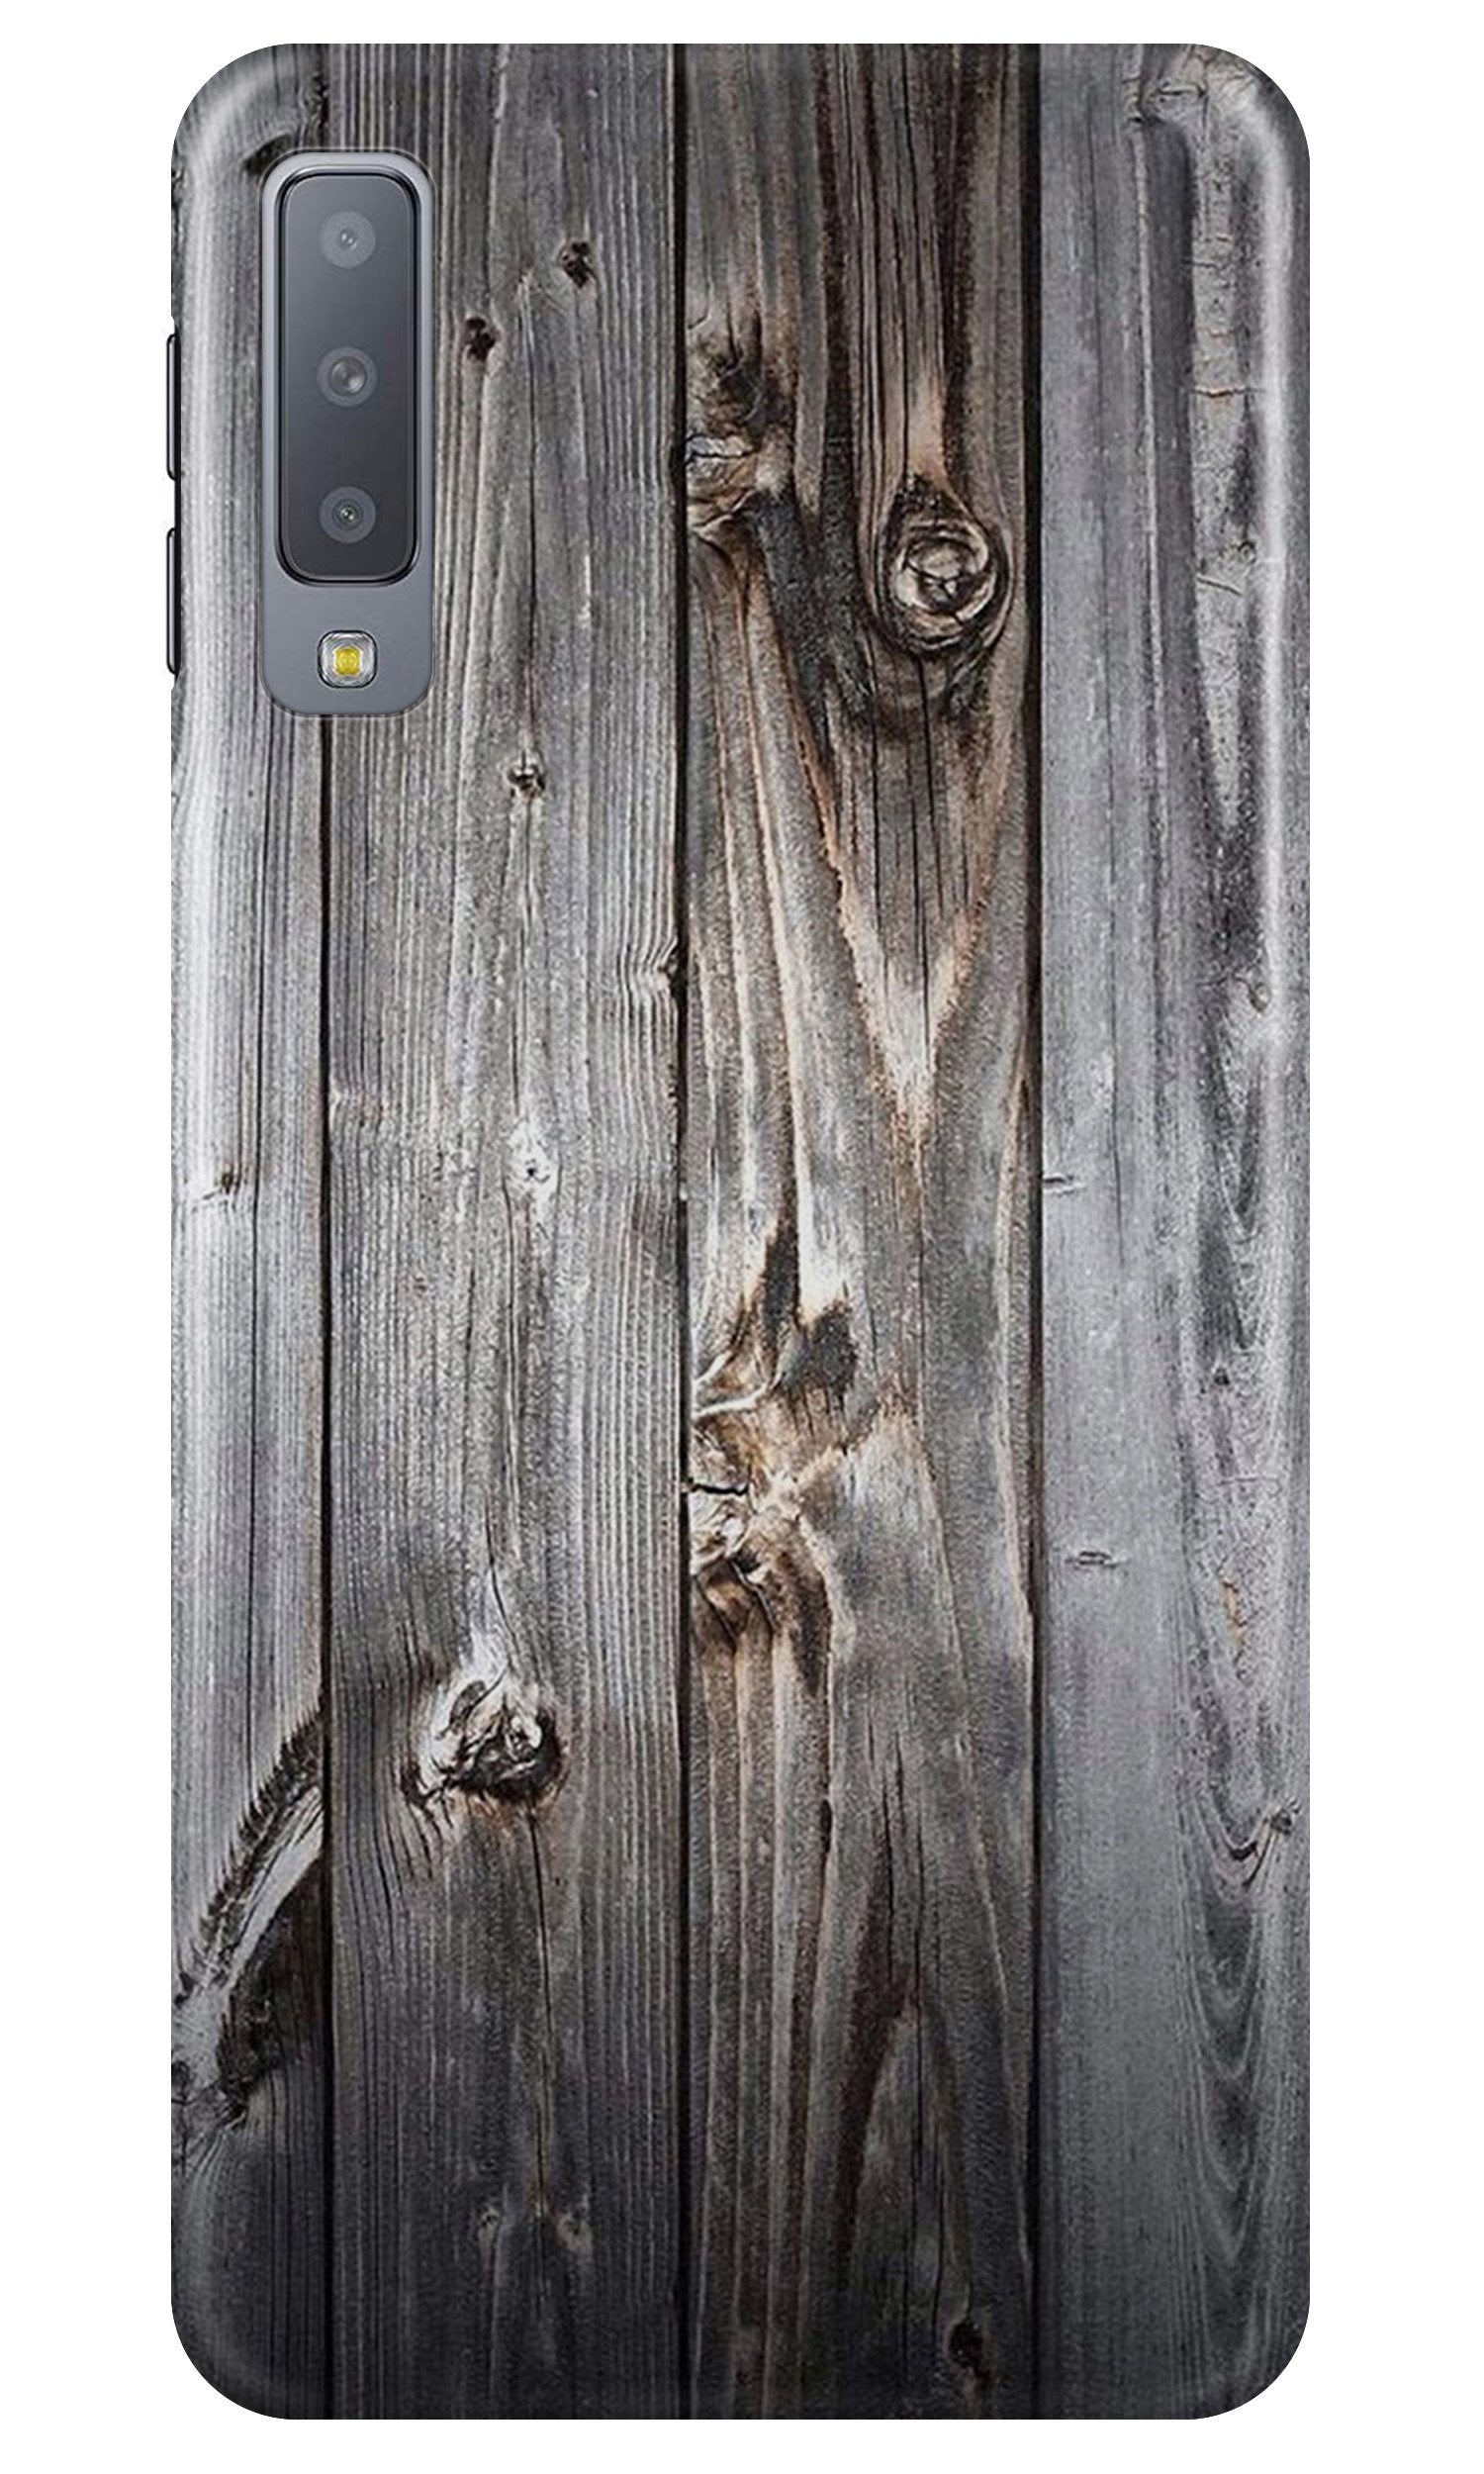 Wooden Look Case for Samung Galaxy A70s(Design - 114)